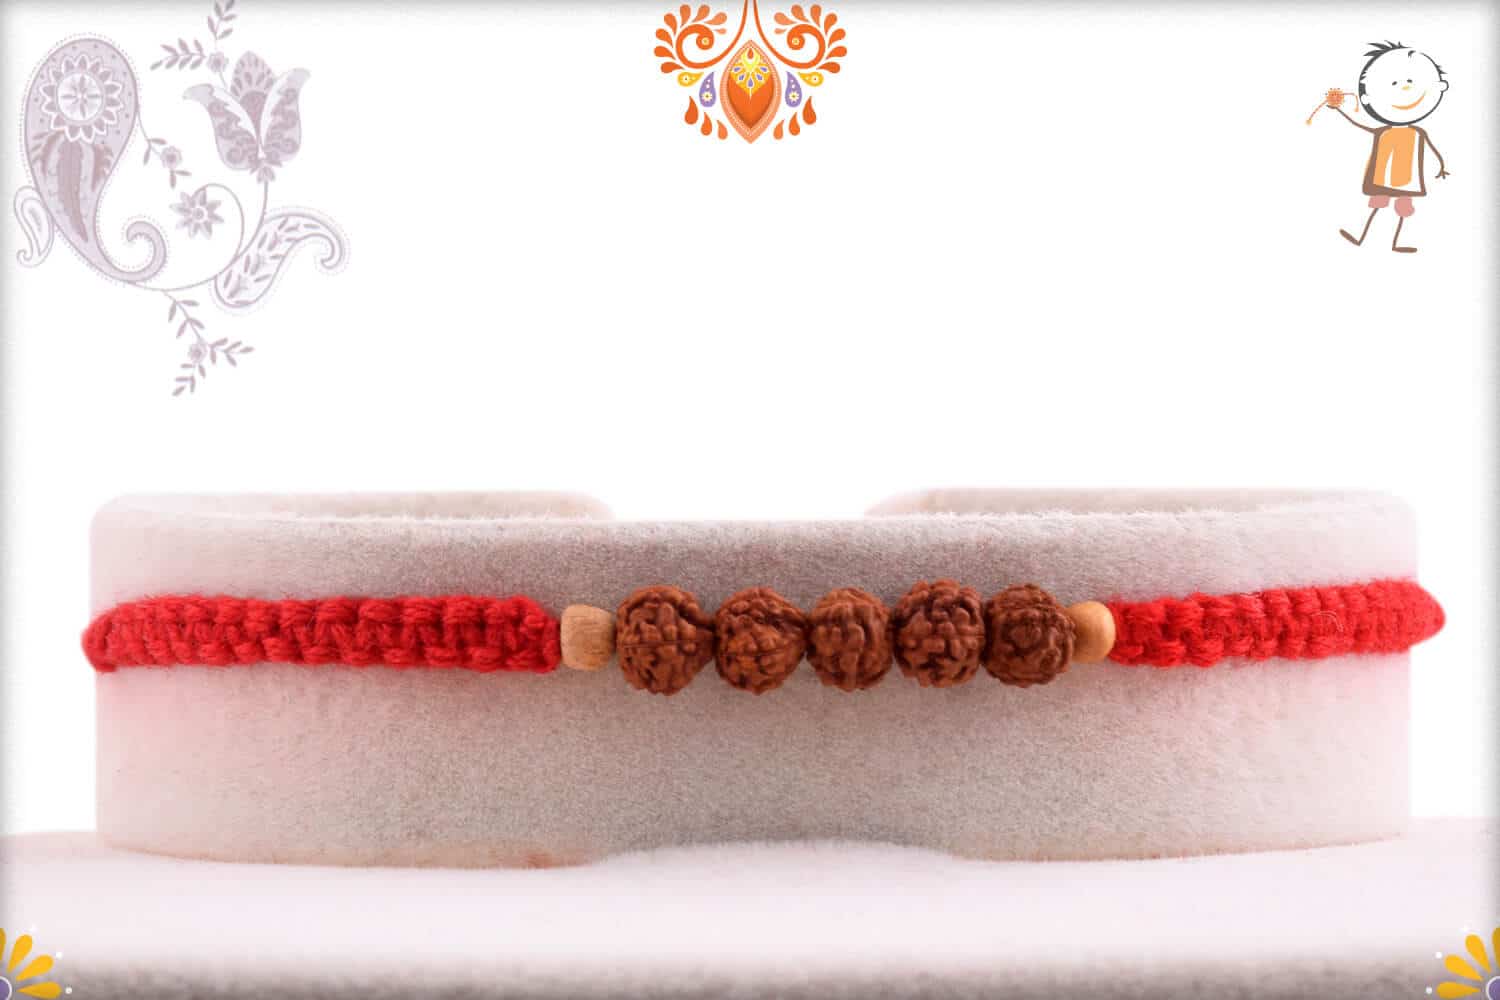 Handcrafted Red Thread Rakhi with 5 Rudraksh | Send Rakhi Gifts Online 1